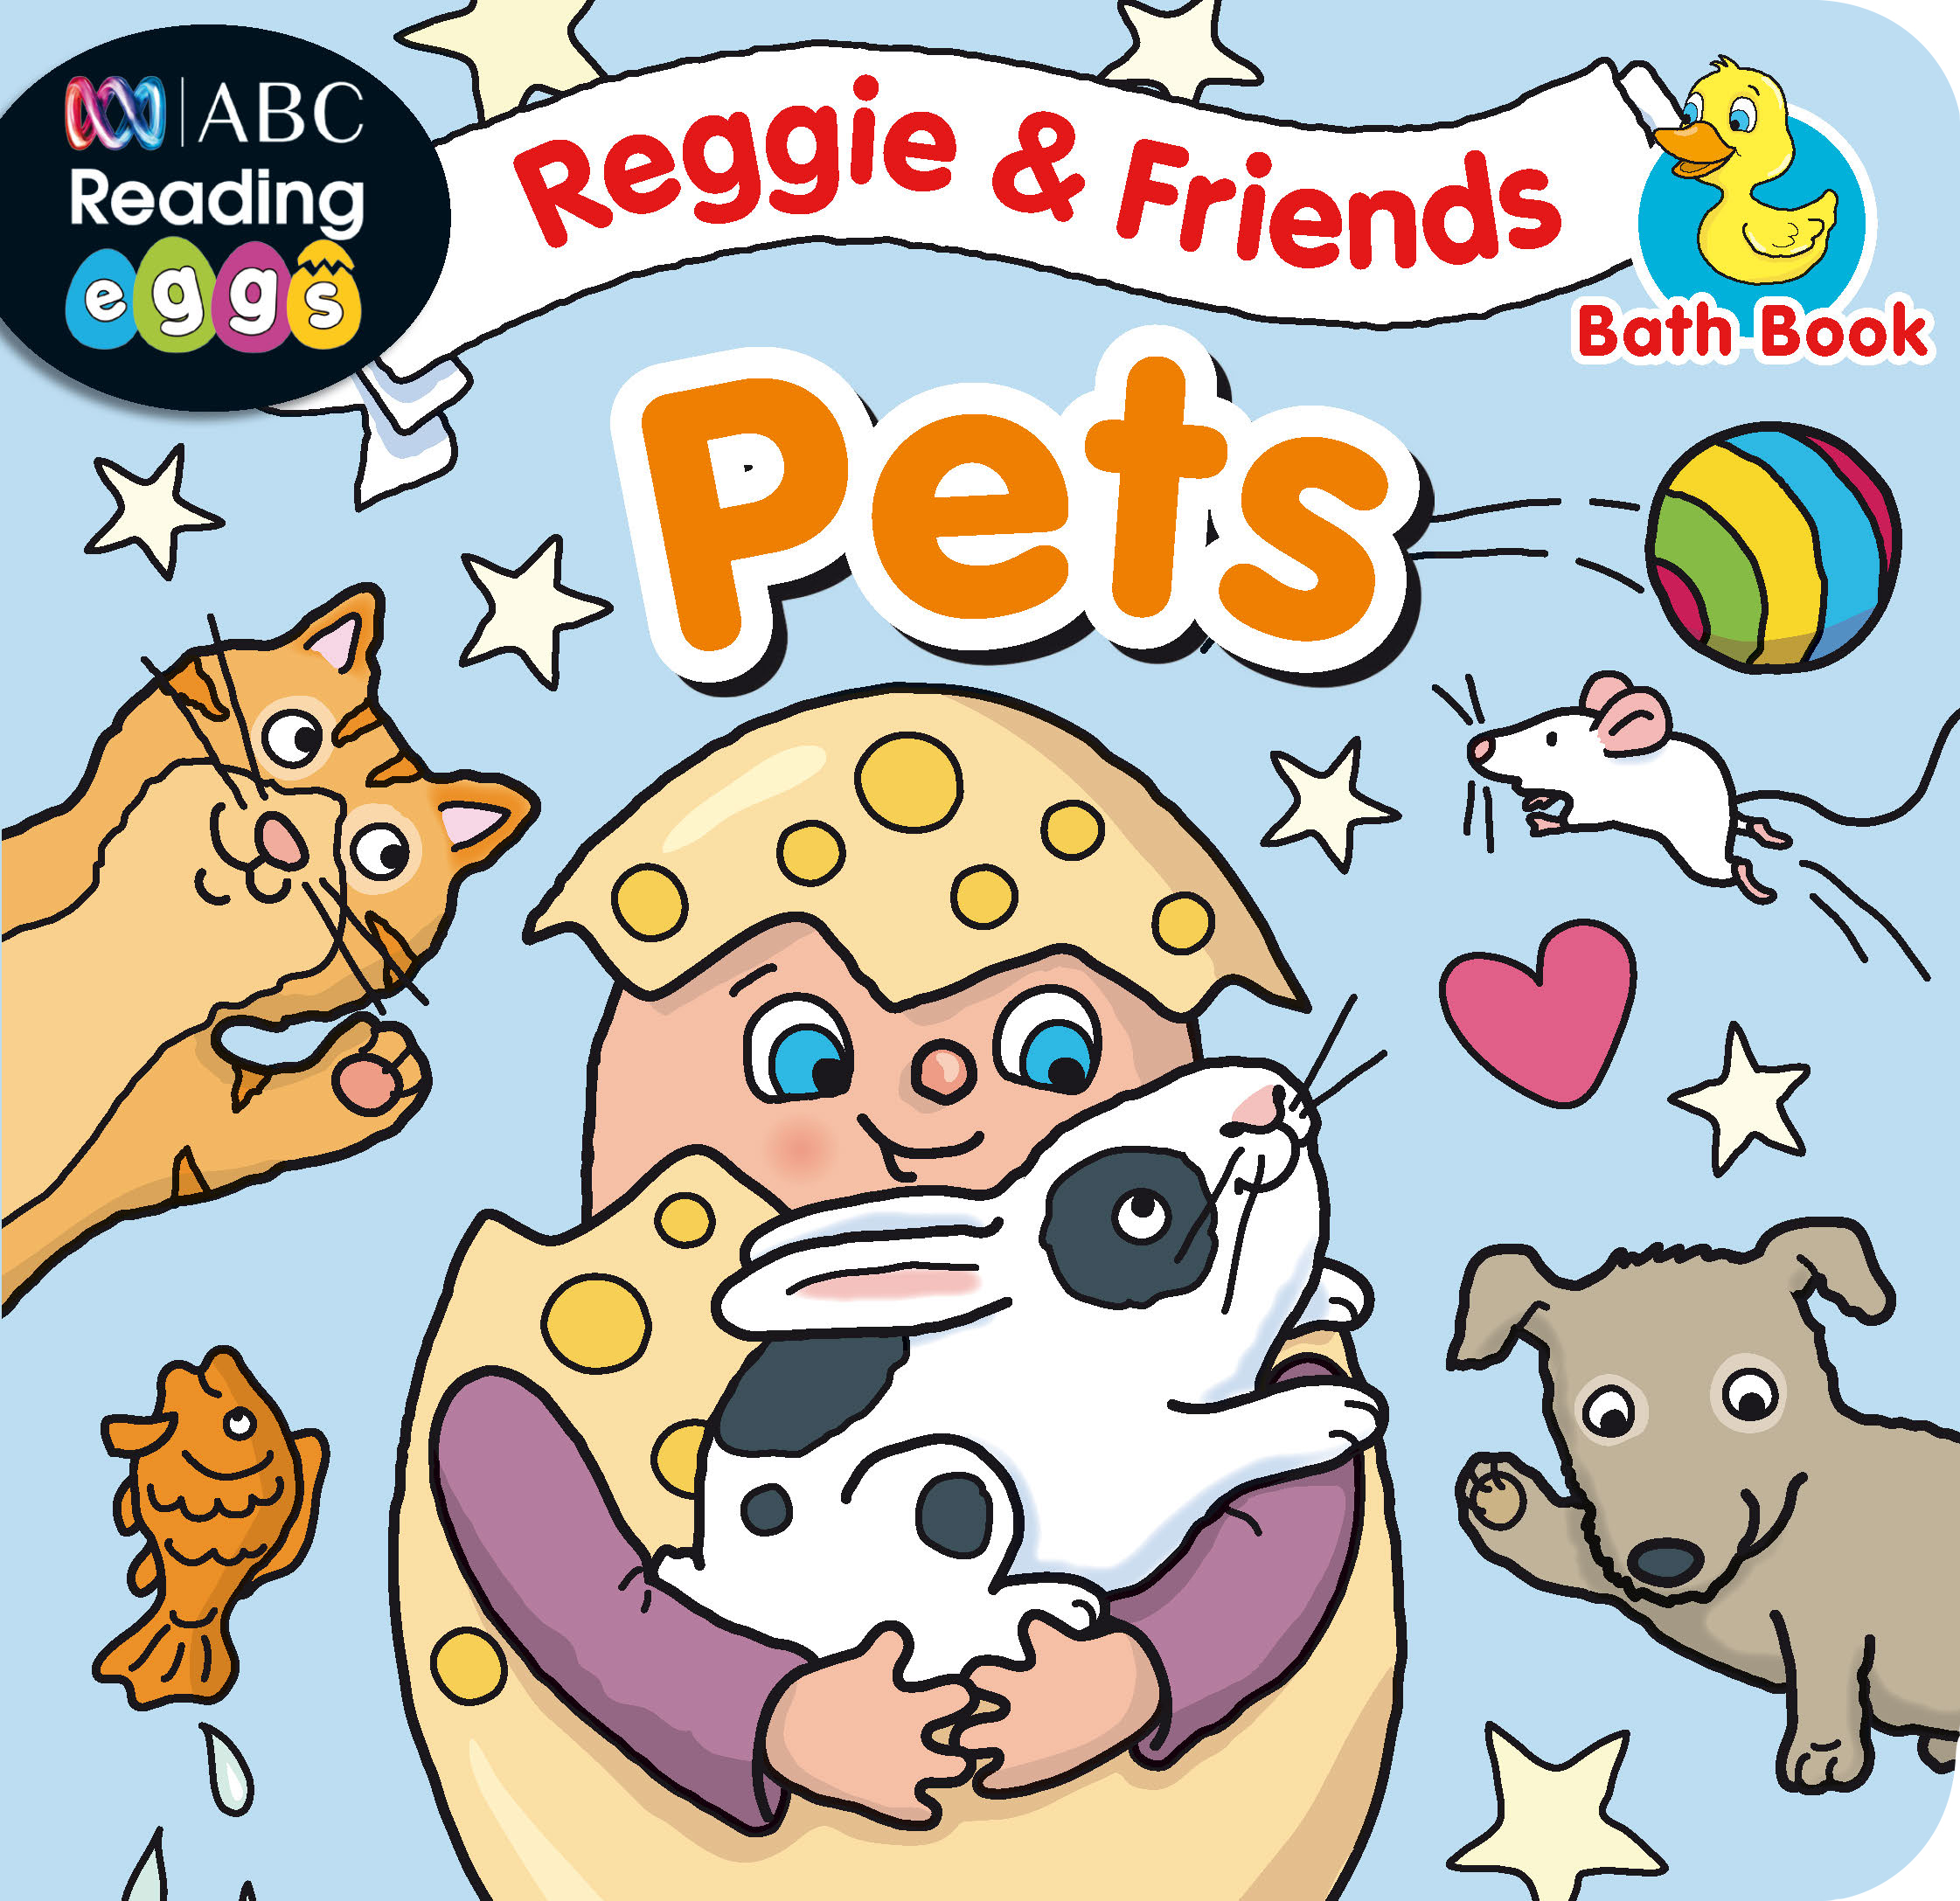 Picture of ABC Reading Eggs Bath Book - Reggie & Friends: Pets